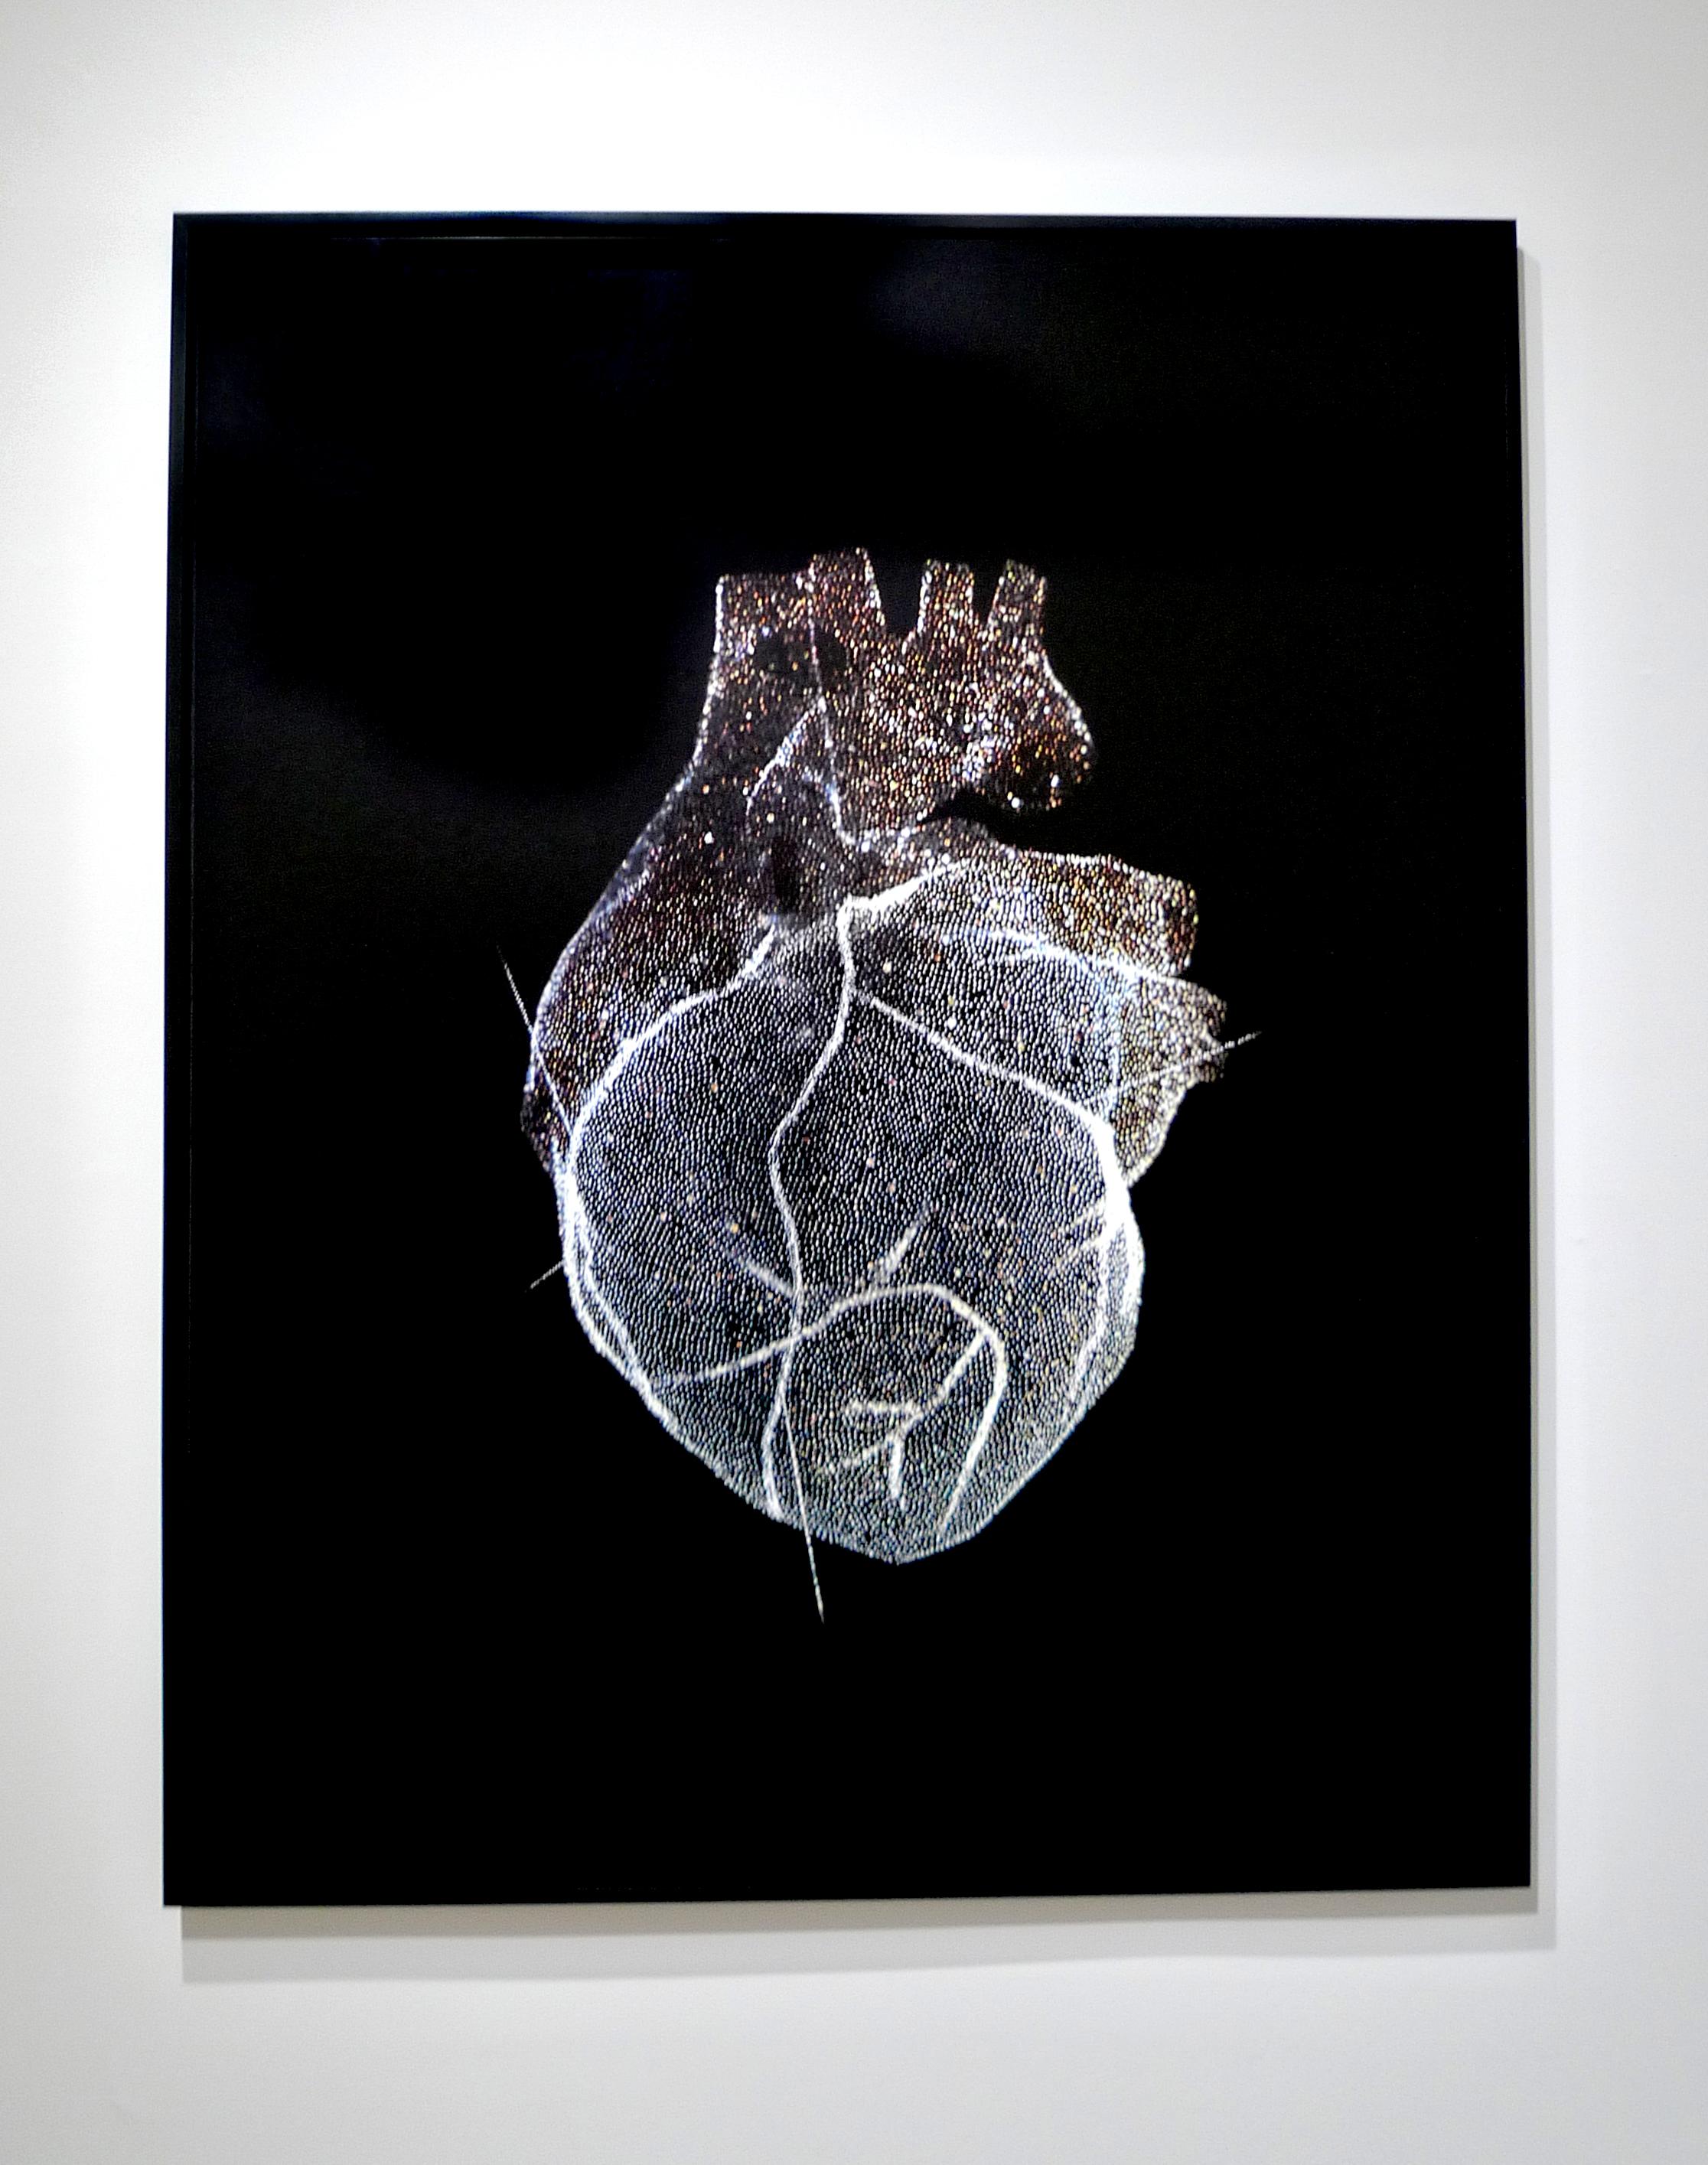 Glass Model of a Heart, love - Photograph by Reiner Riedler